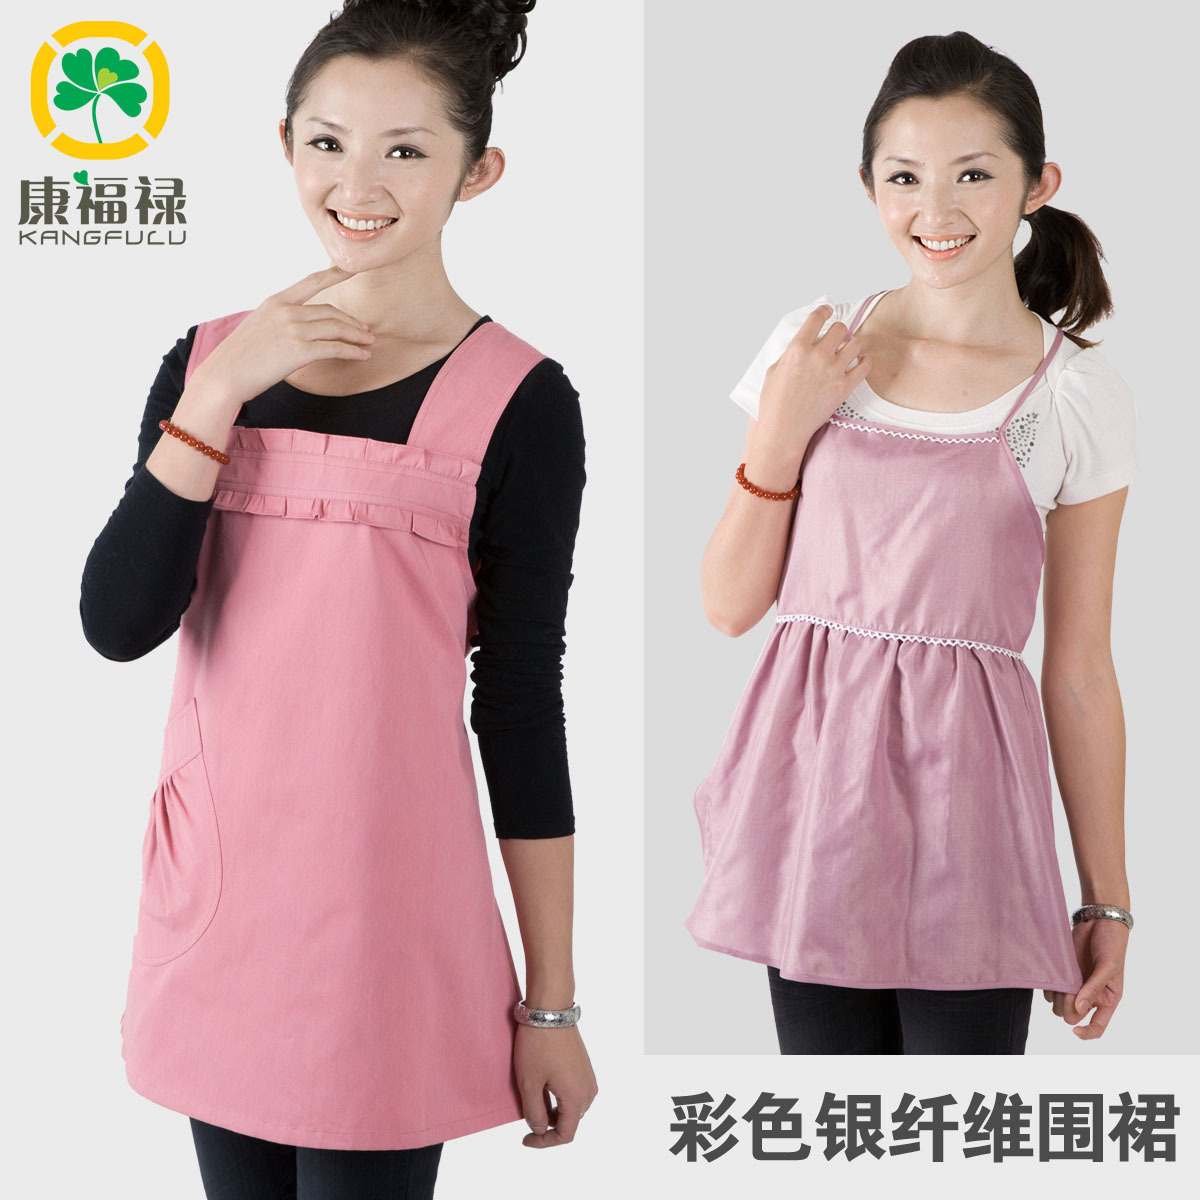 Double silver fiber apron radiation-resistant maternity clothing maternity radiation-resistant clothes 302y103